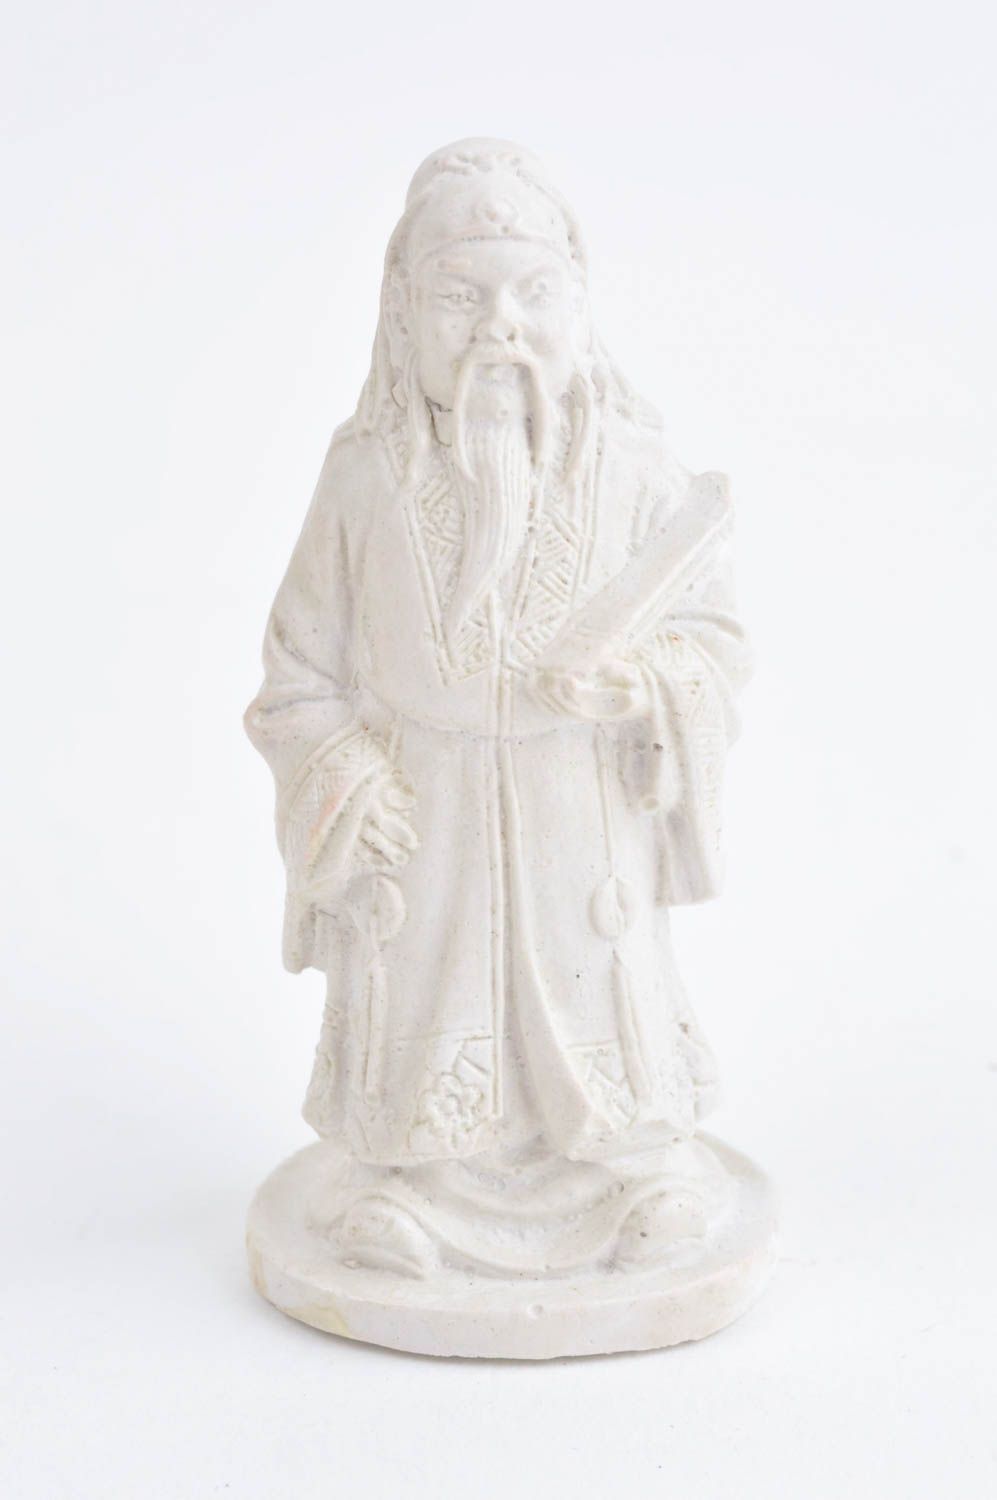 Handmade statuette unusual gift ideas plaster souvenir decorative use only photo 2